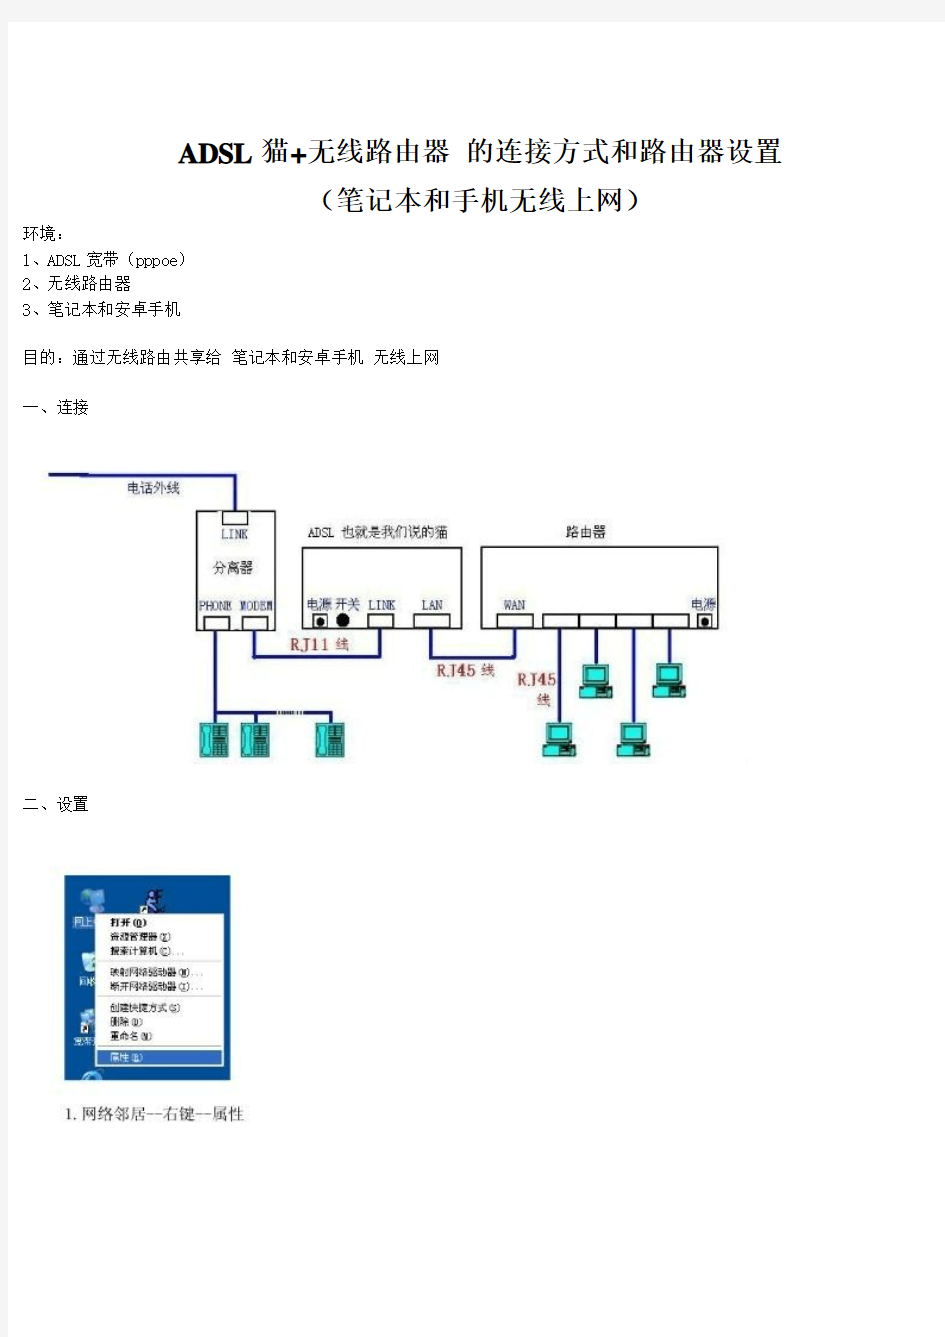 ADSL猫+无线路由器 的连接方式和路由器设置